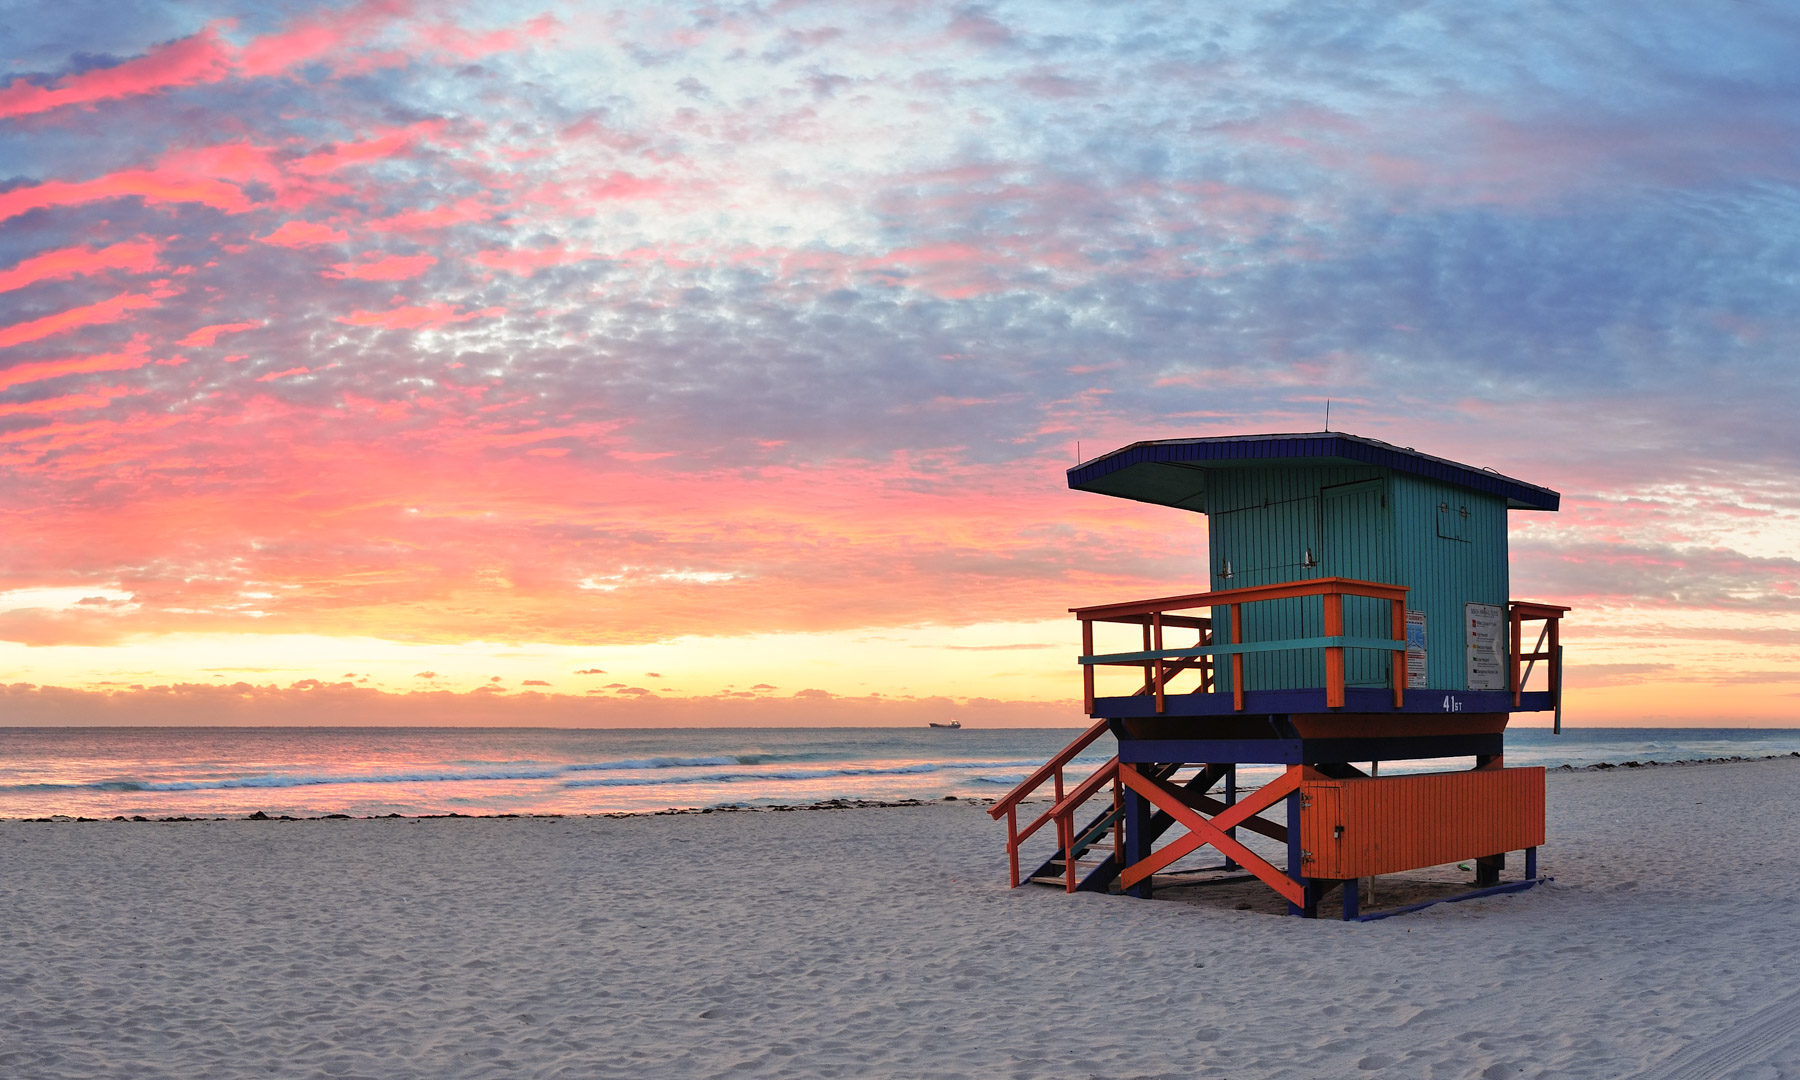 Airbnb South Beach, Miami Vacation Homes & Short-Term Rentals